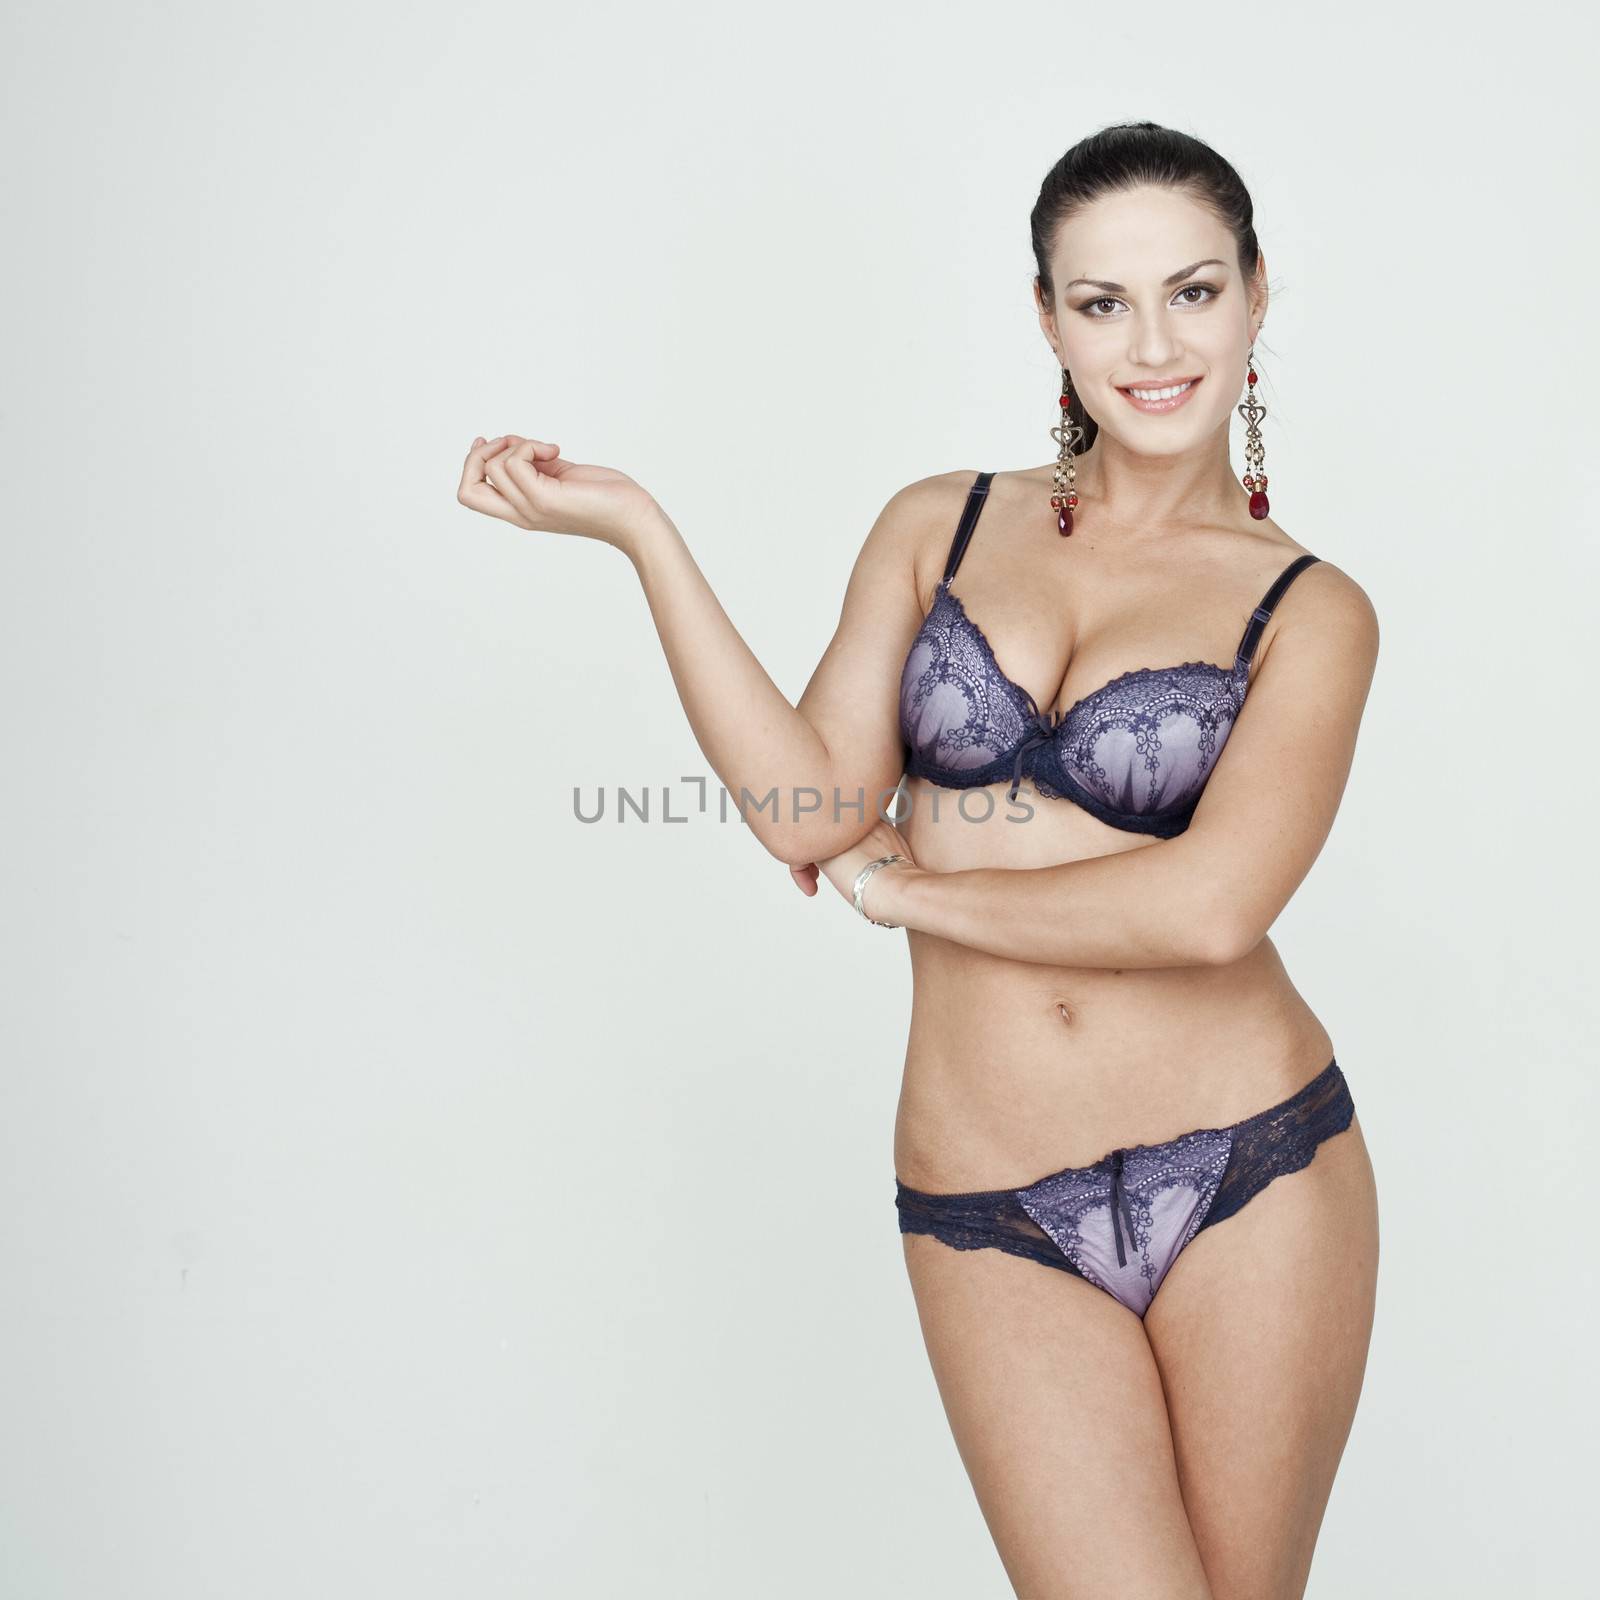 Sexy underwear model by andersonrise